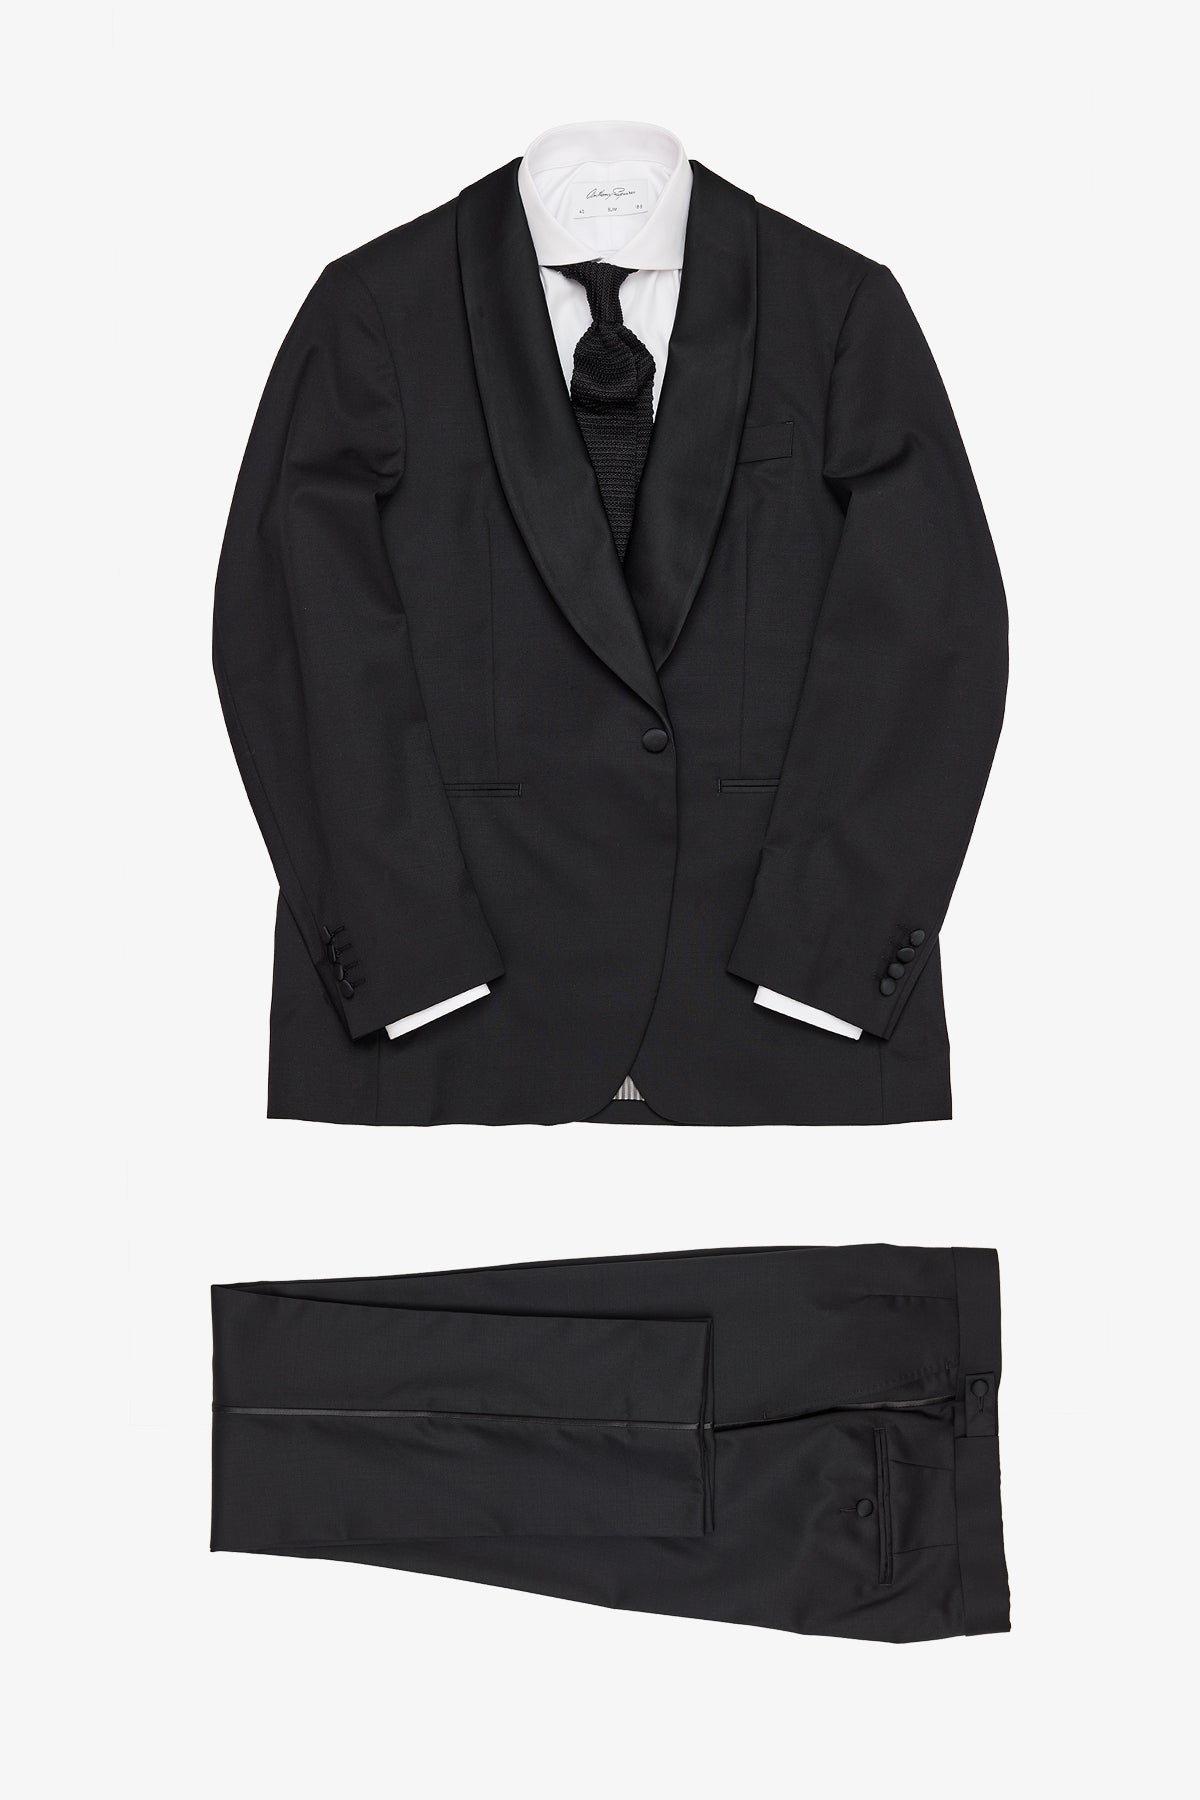 Andrew - Black Dinner Suit